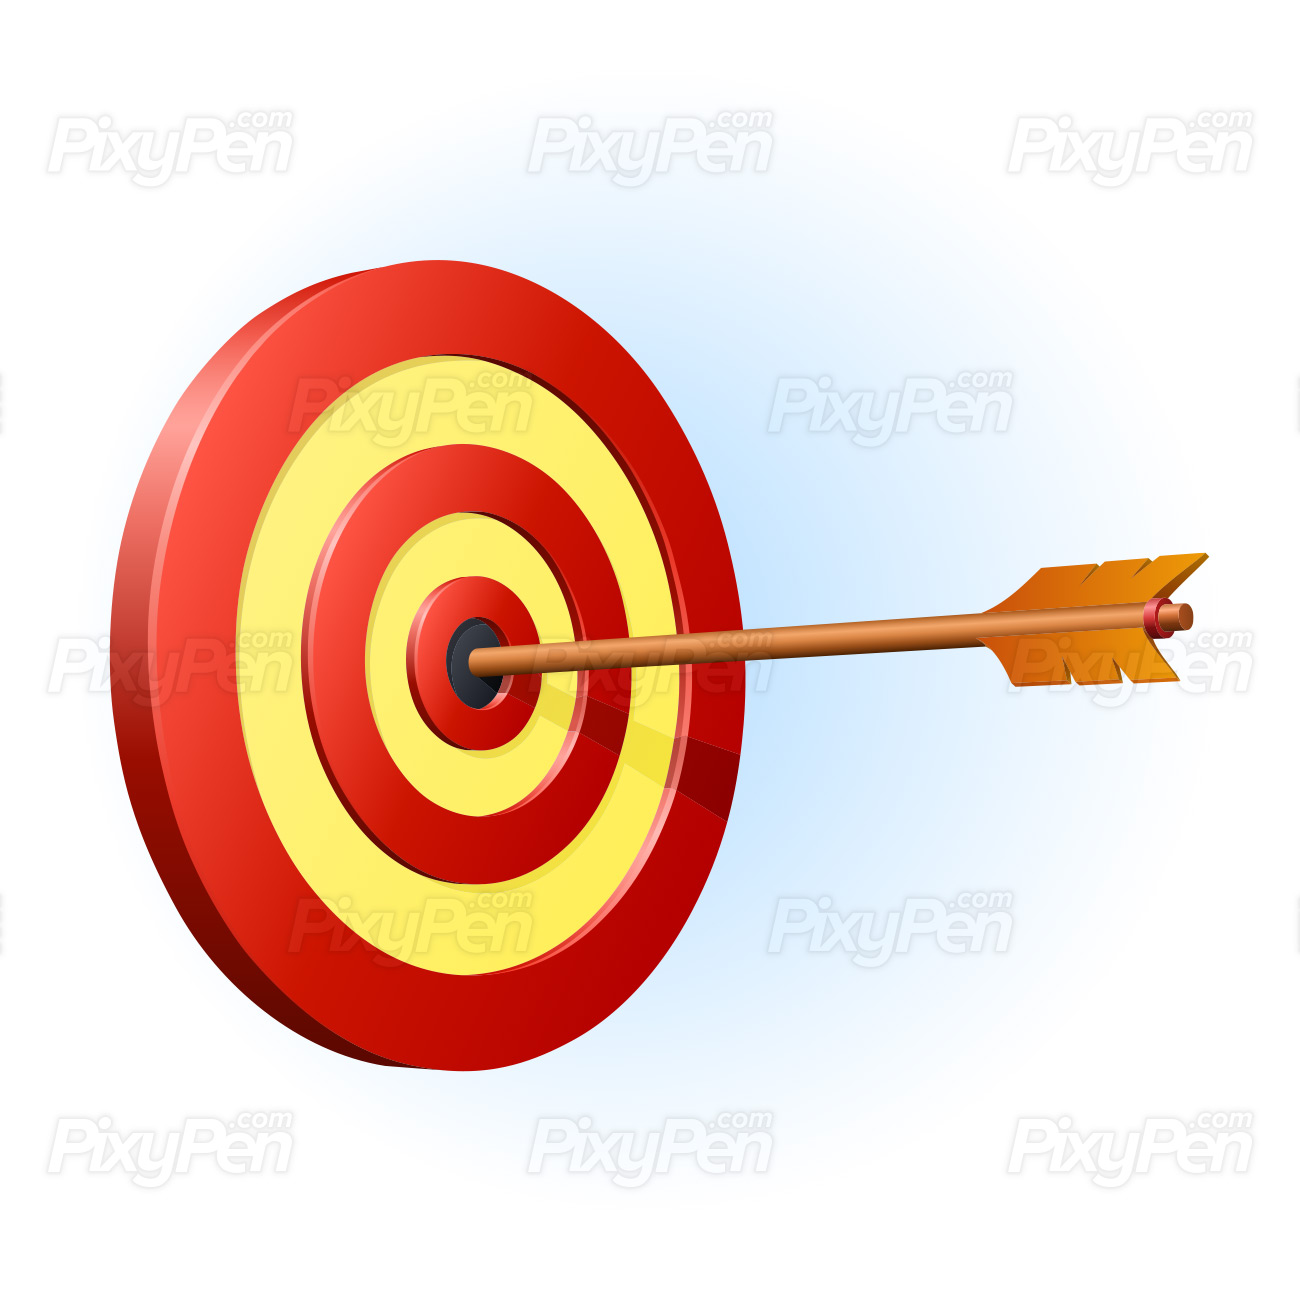 target with arrow clip art